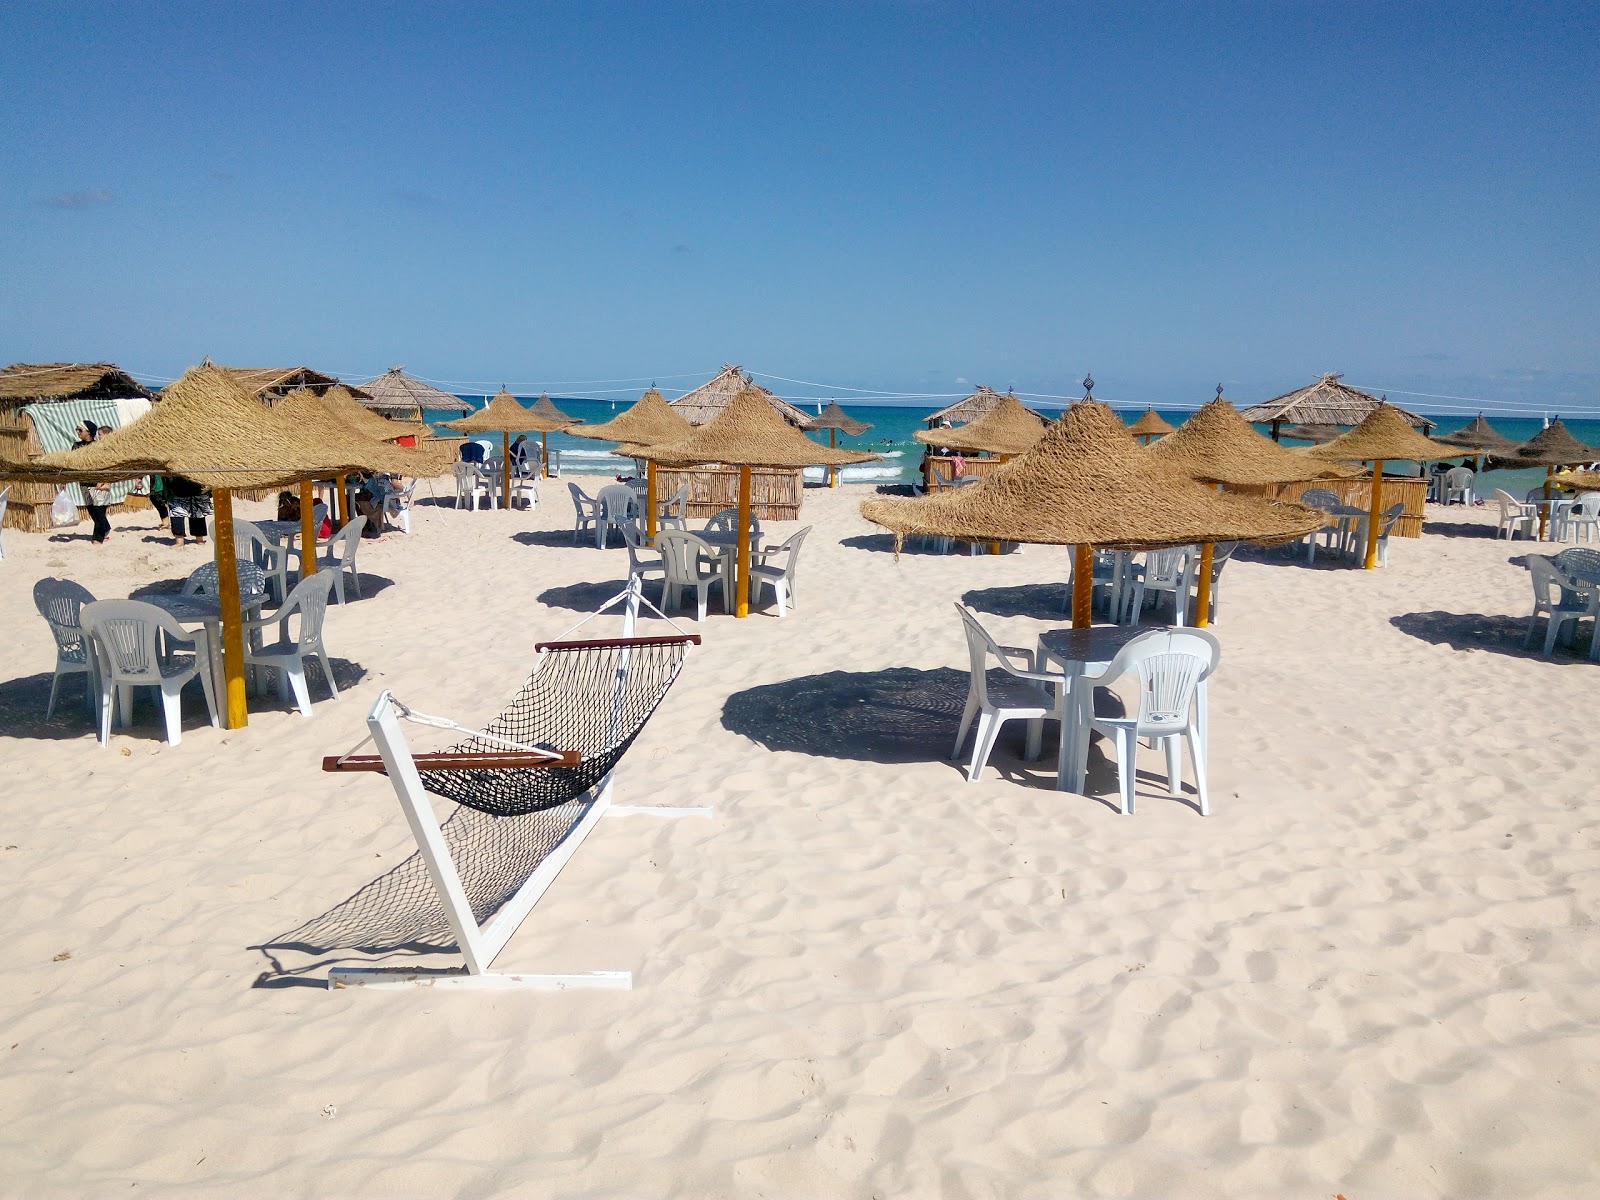 Foto de Ghar El Melh área de resort de praia